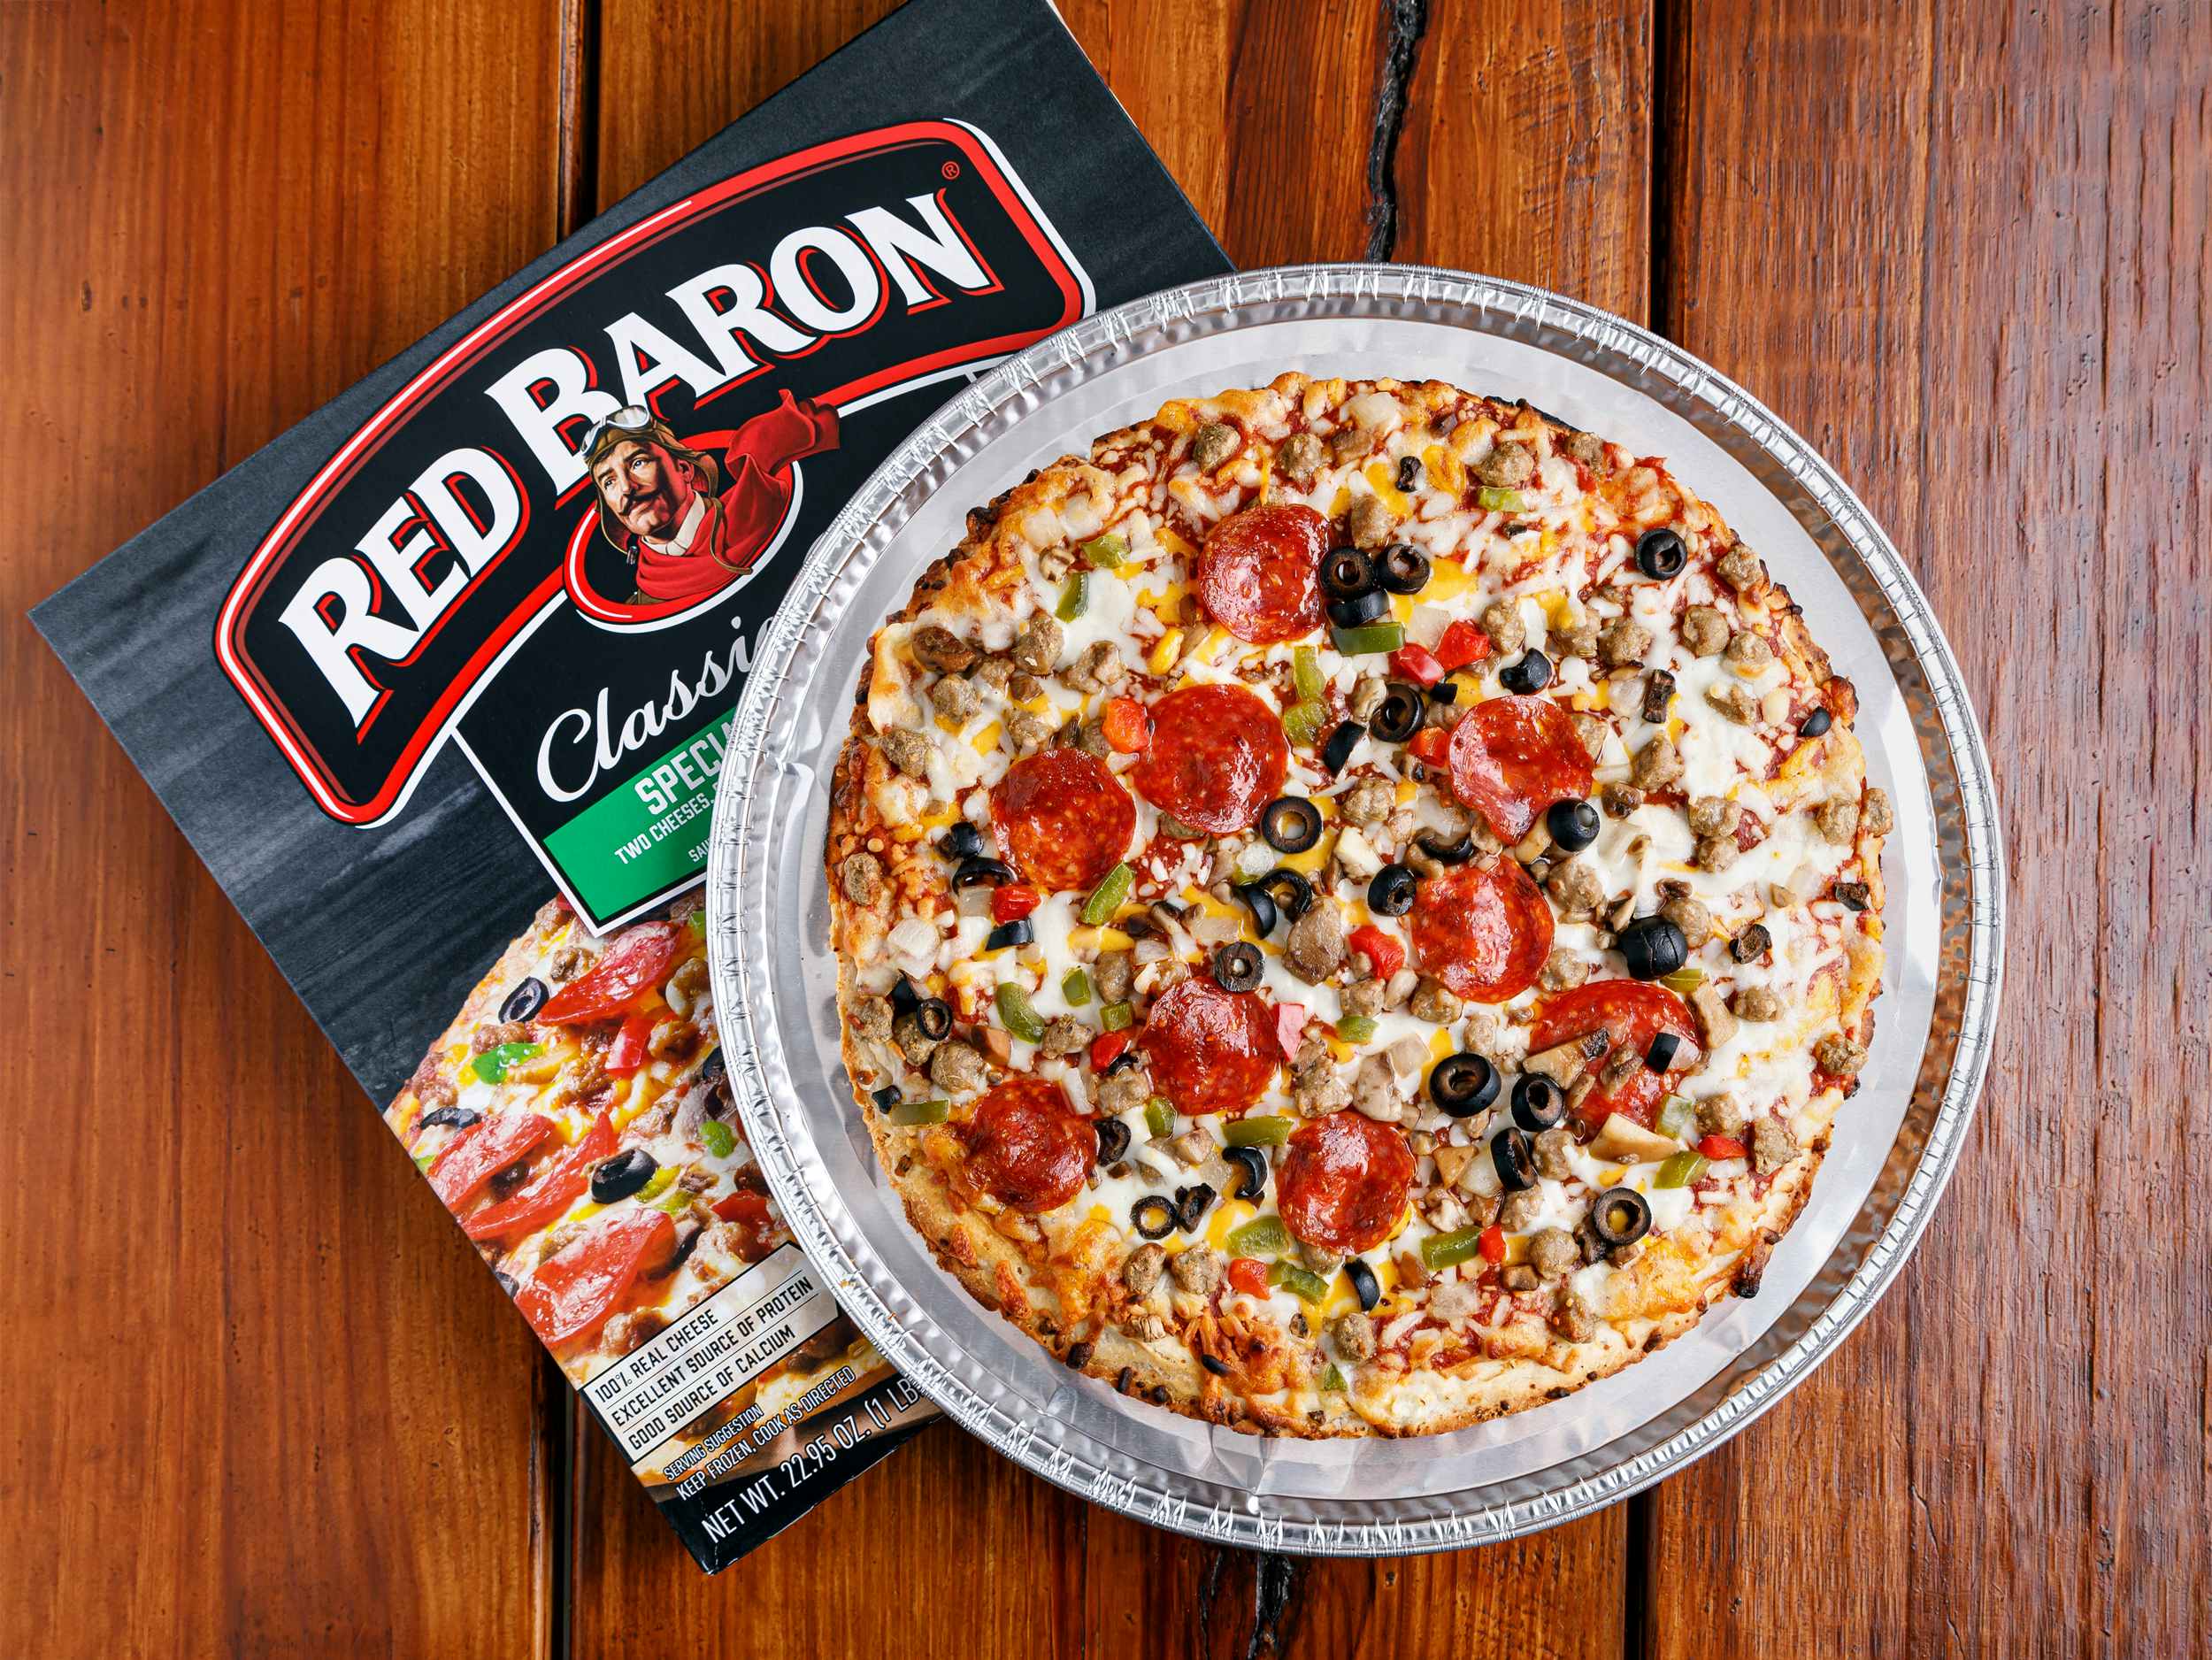 red baron classic specialty supreme frozen pizza